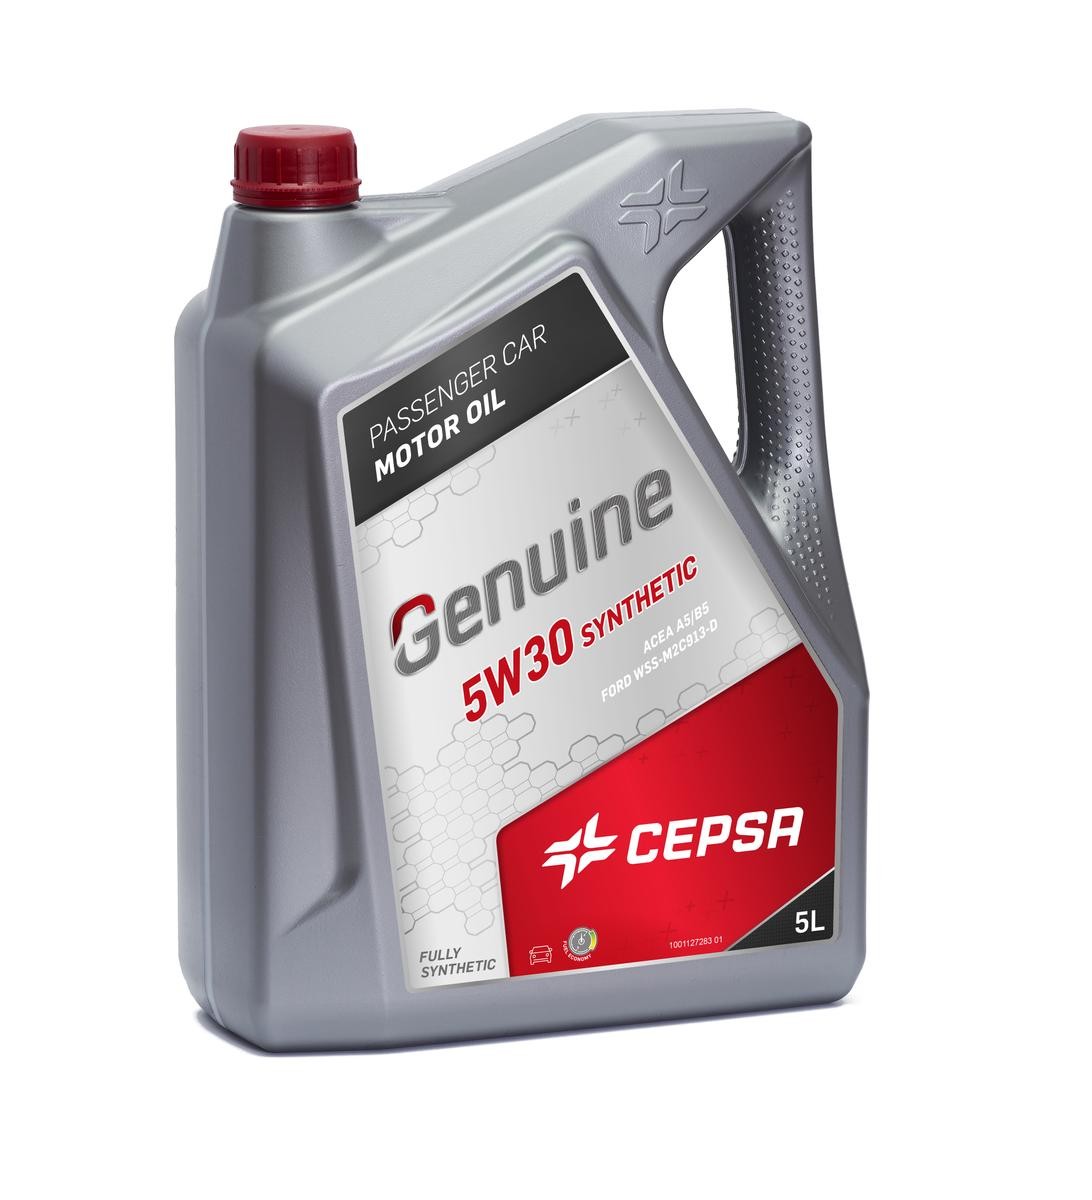 CEPSA GENUINE, SYNTHETIC 5W-30, 5l, Synthetic, Full Synthetic Oil Motor oil 512563090 buy